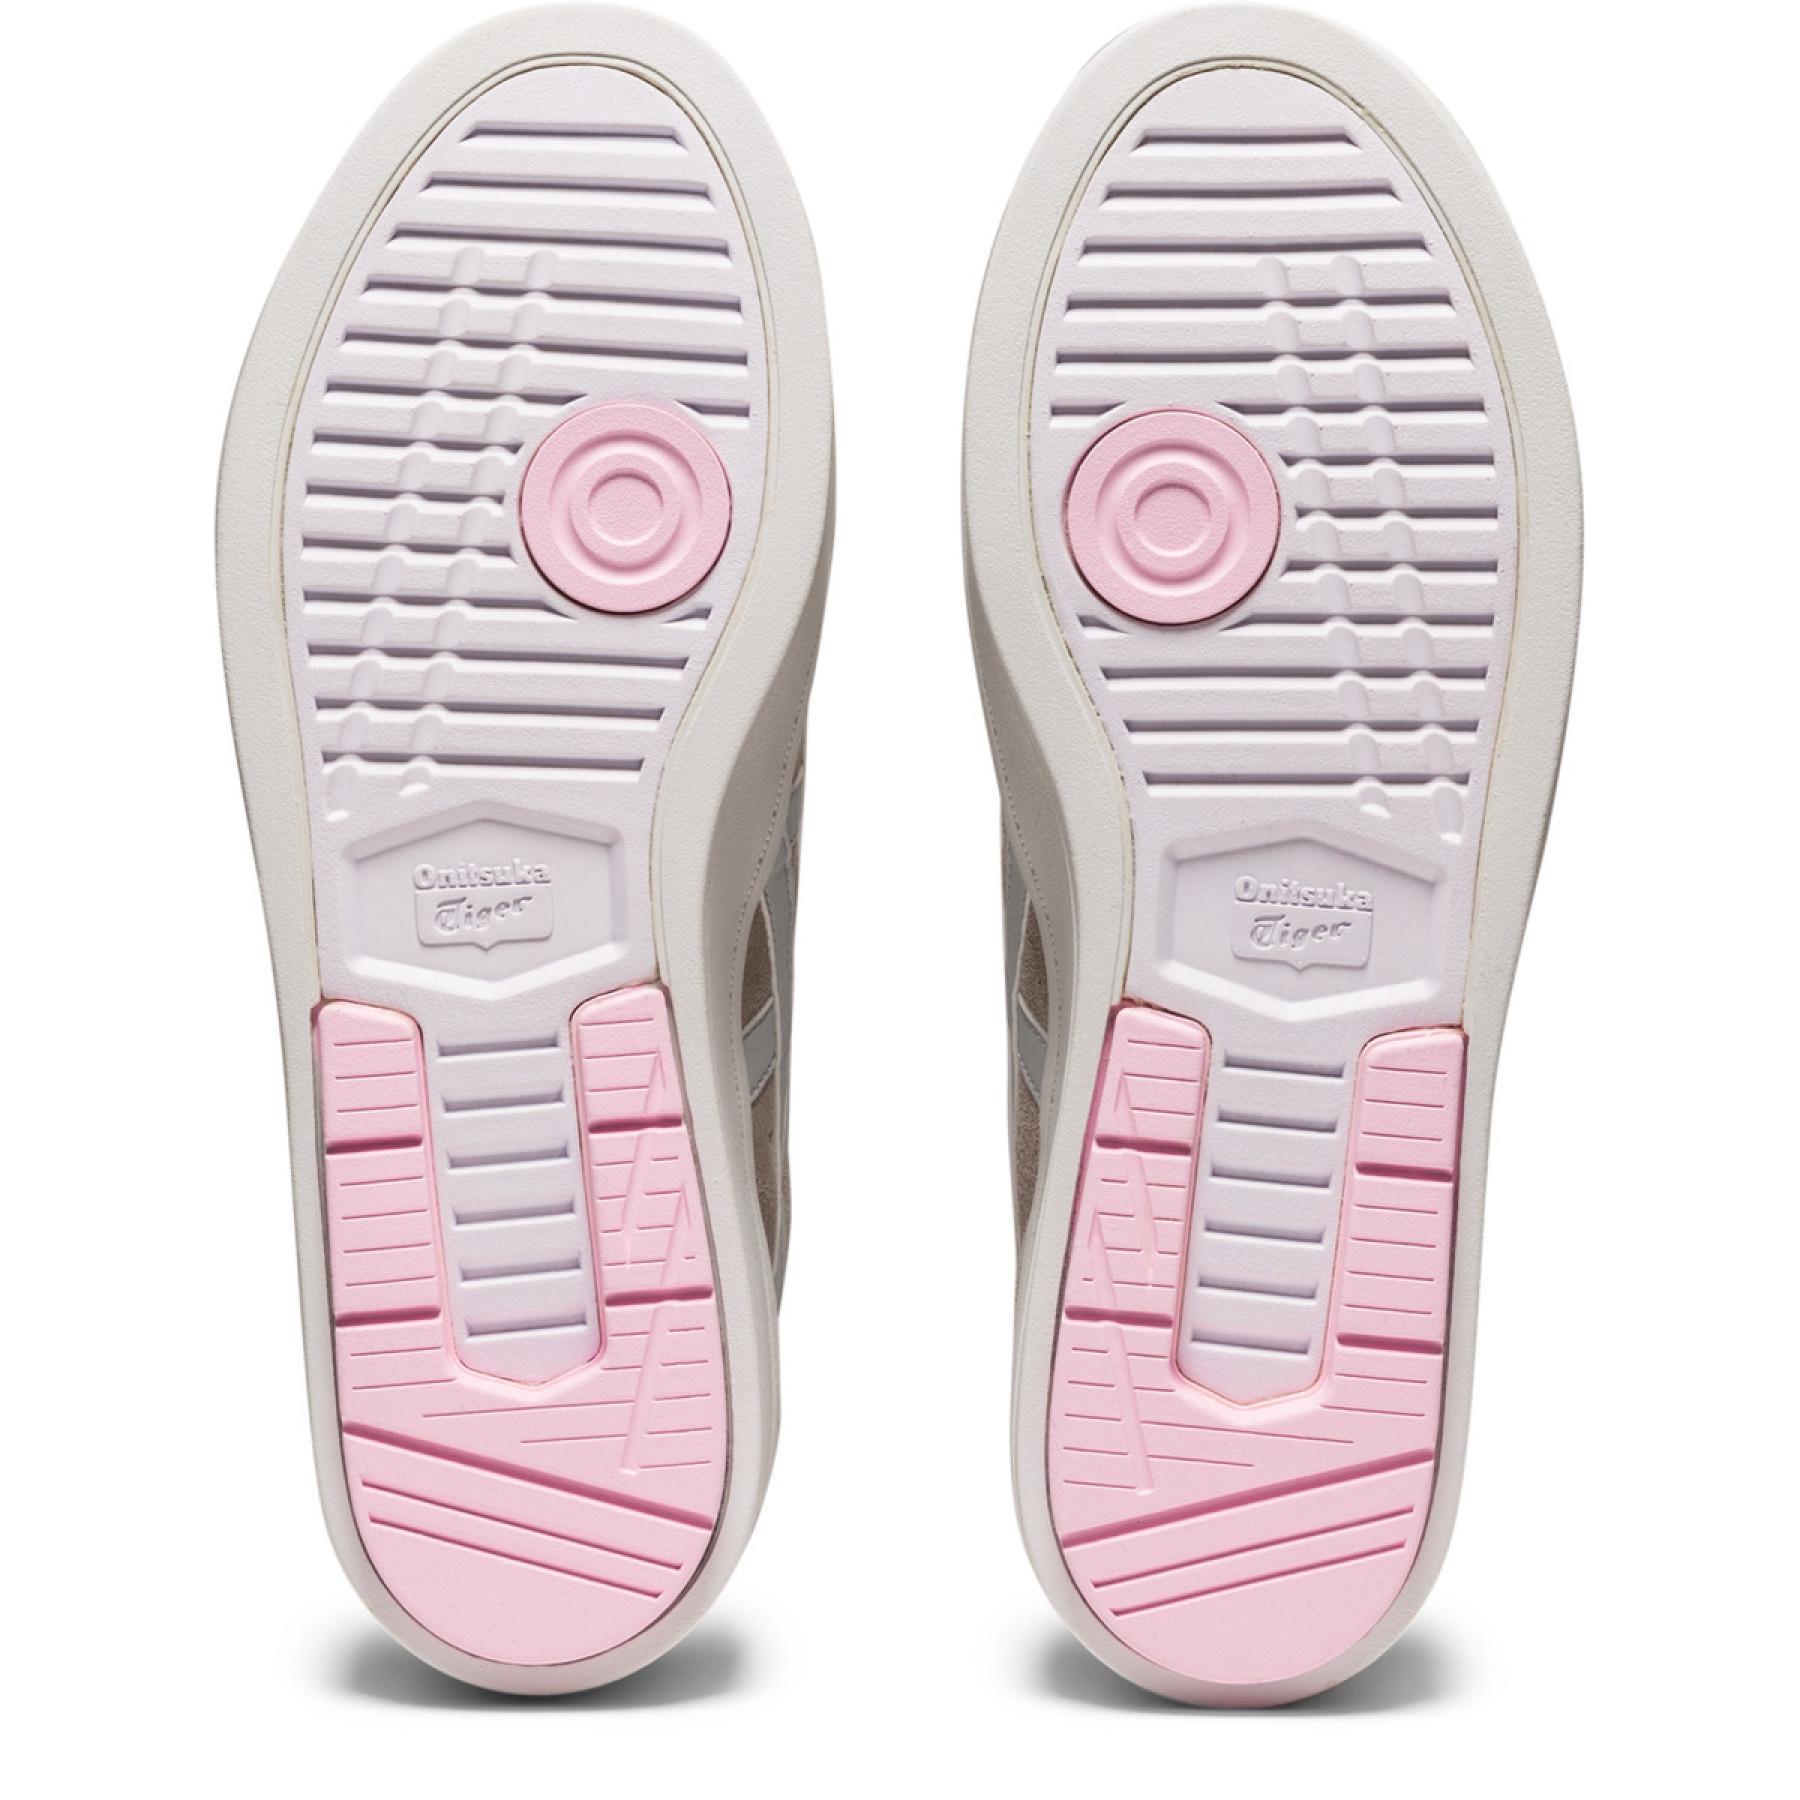 Women's shoes Onitsuka Tiger Gsm